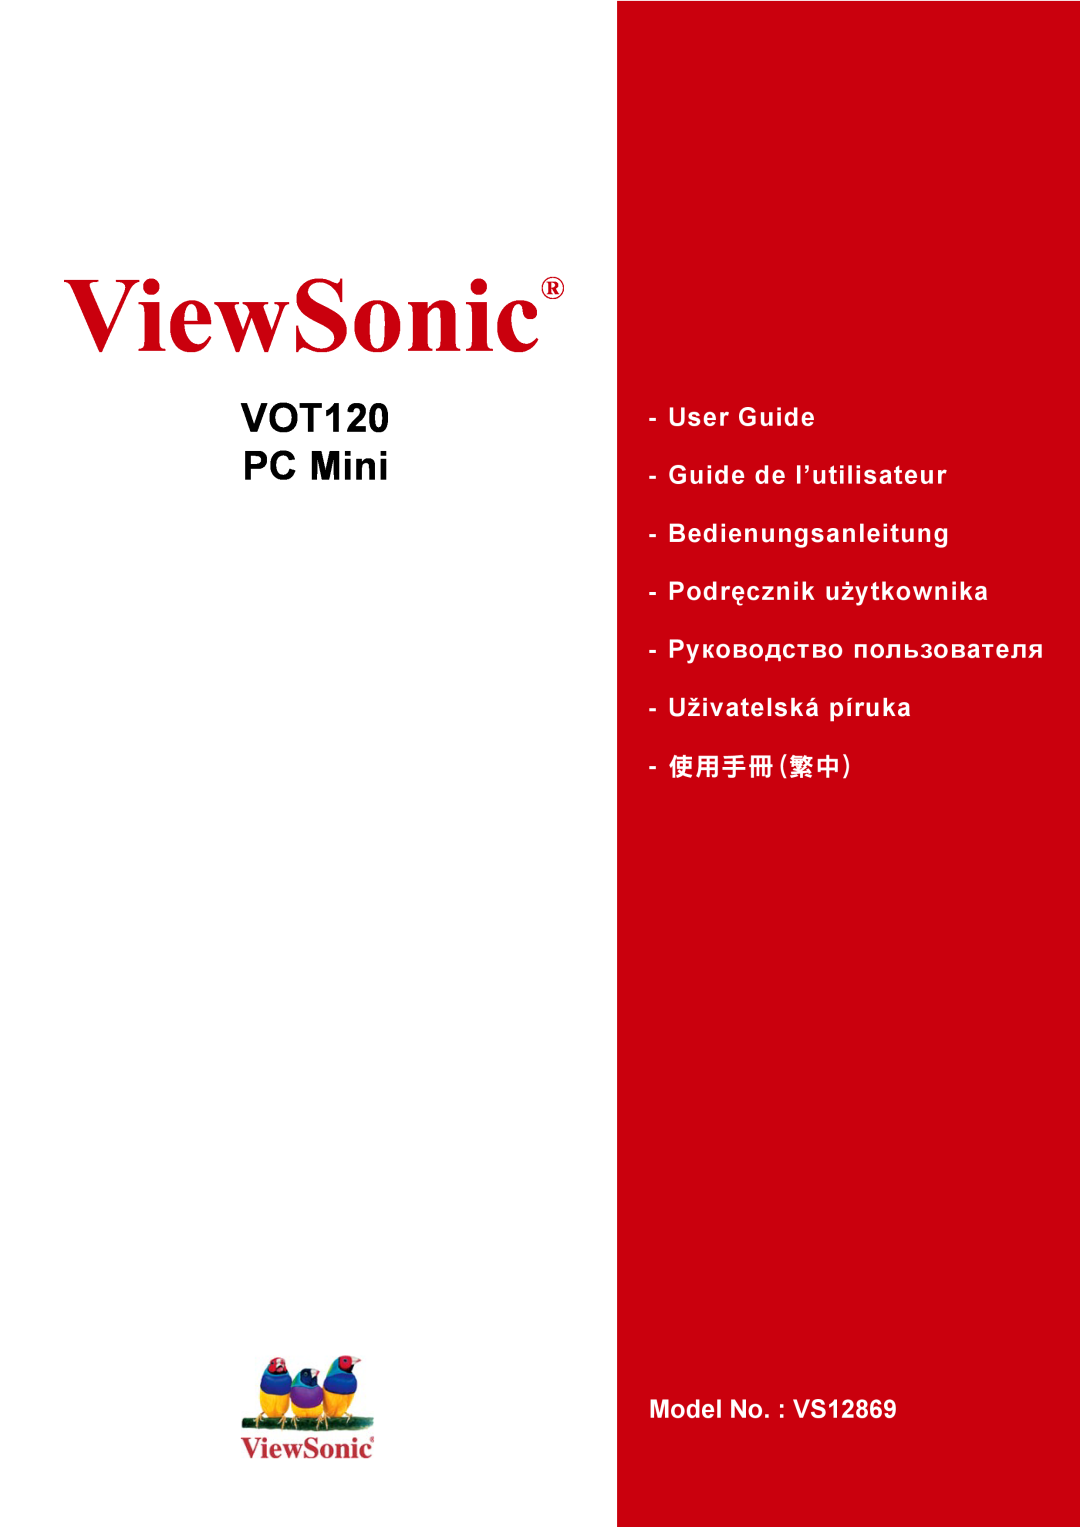 ViewSonic VS12869 manual ViewSonic, VOT120 PC Mini, User Guide Guide de l’utilisateur Bedienungsanleitung, 使用手冊繁中 